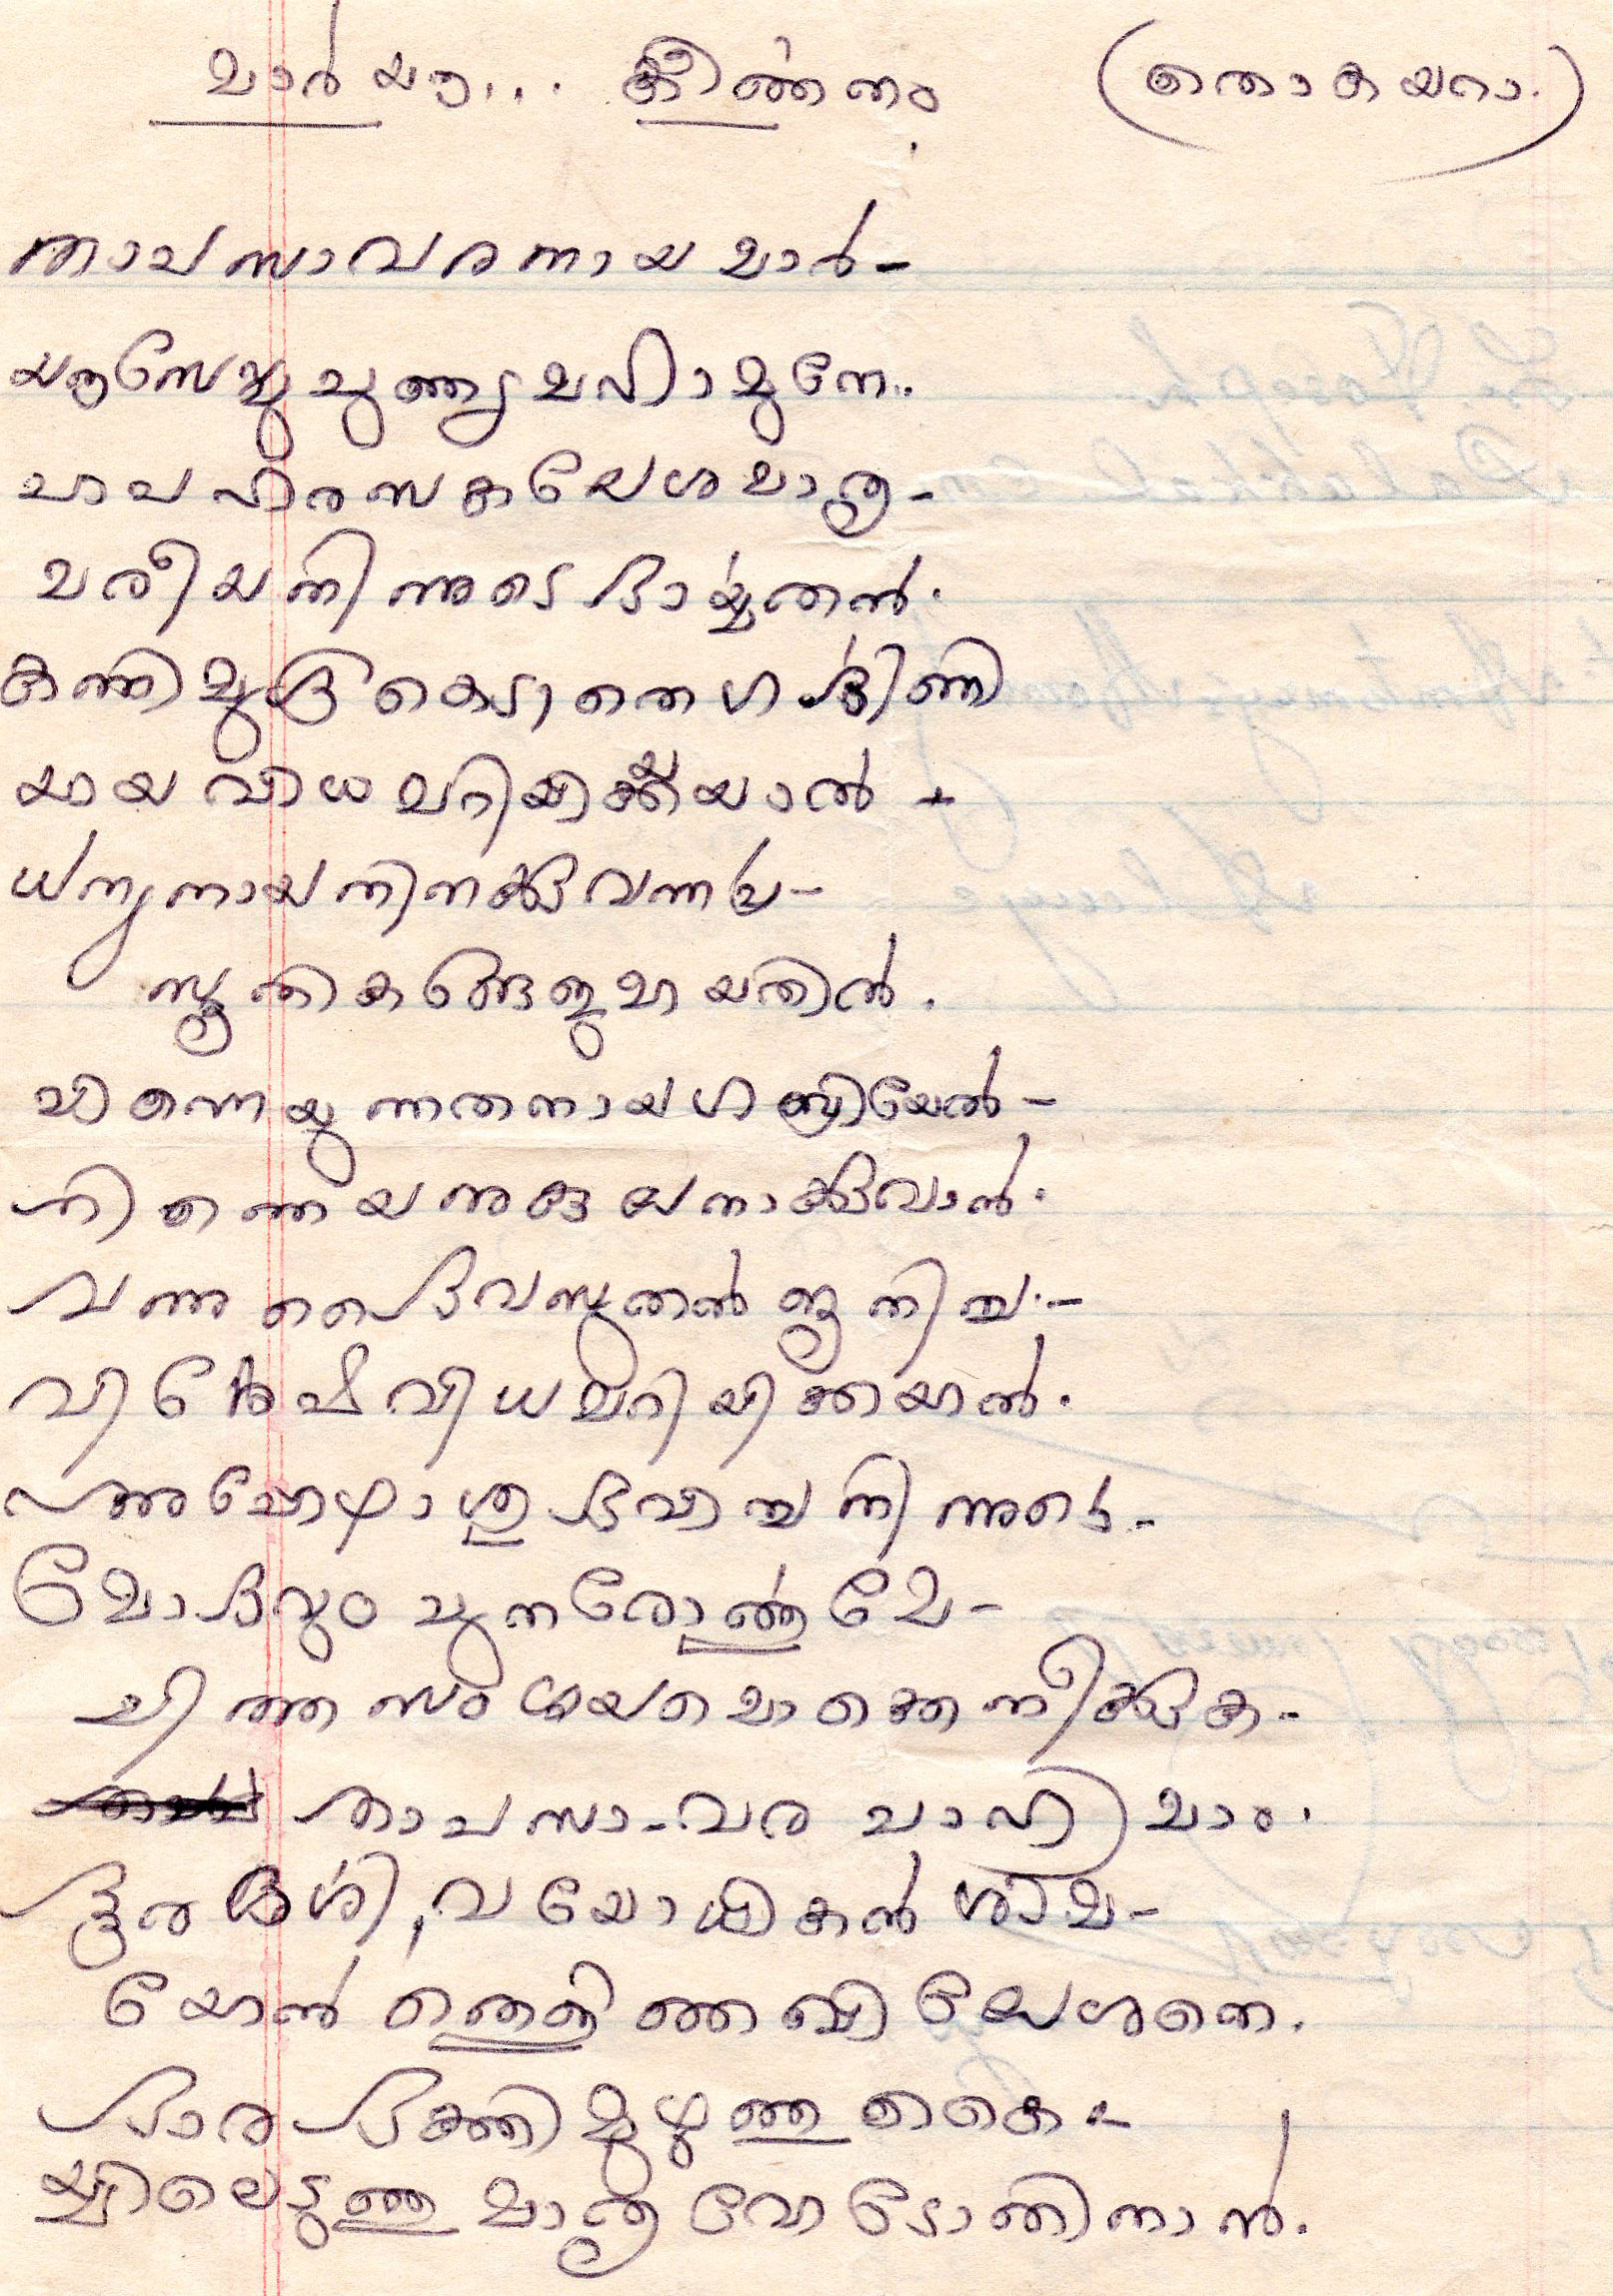 Manuscript written by Varghese T. J-1